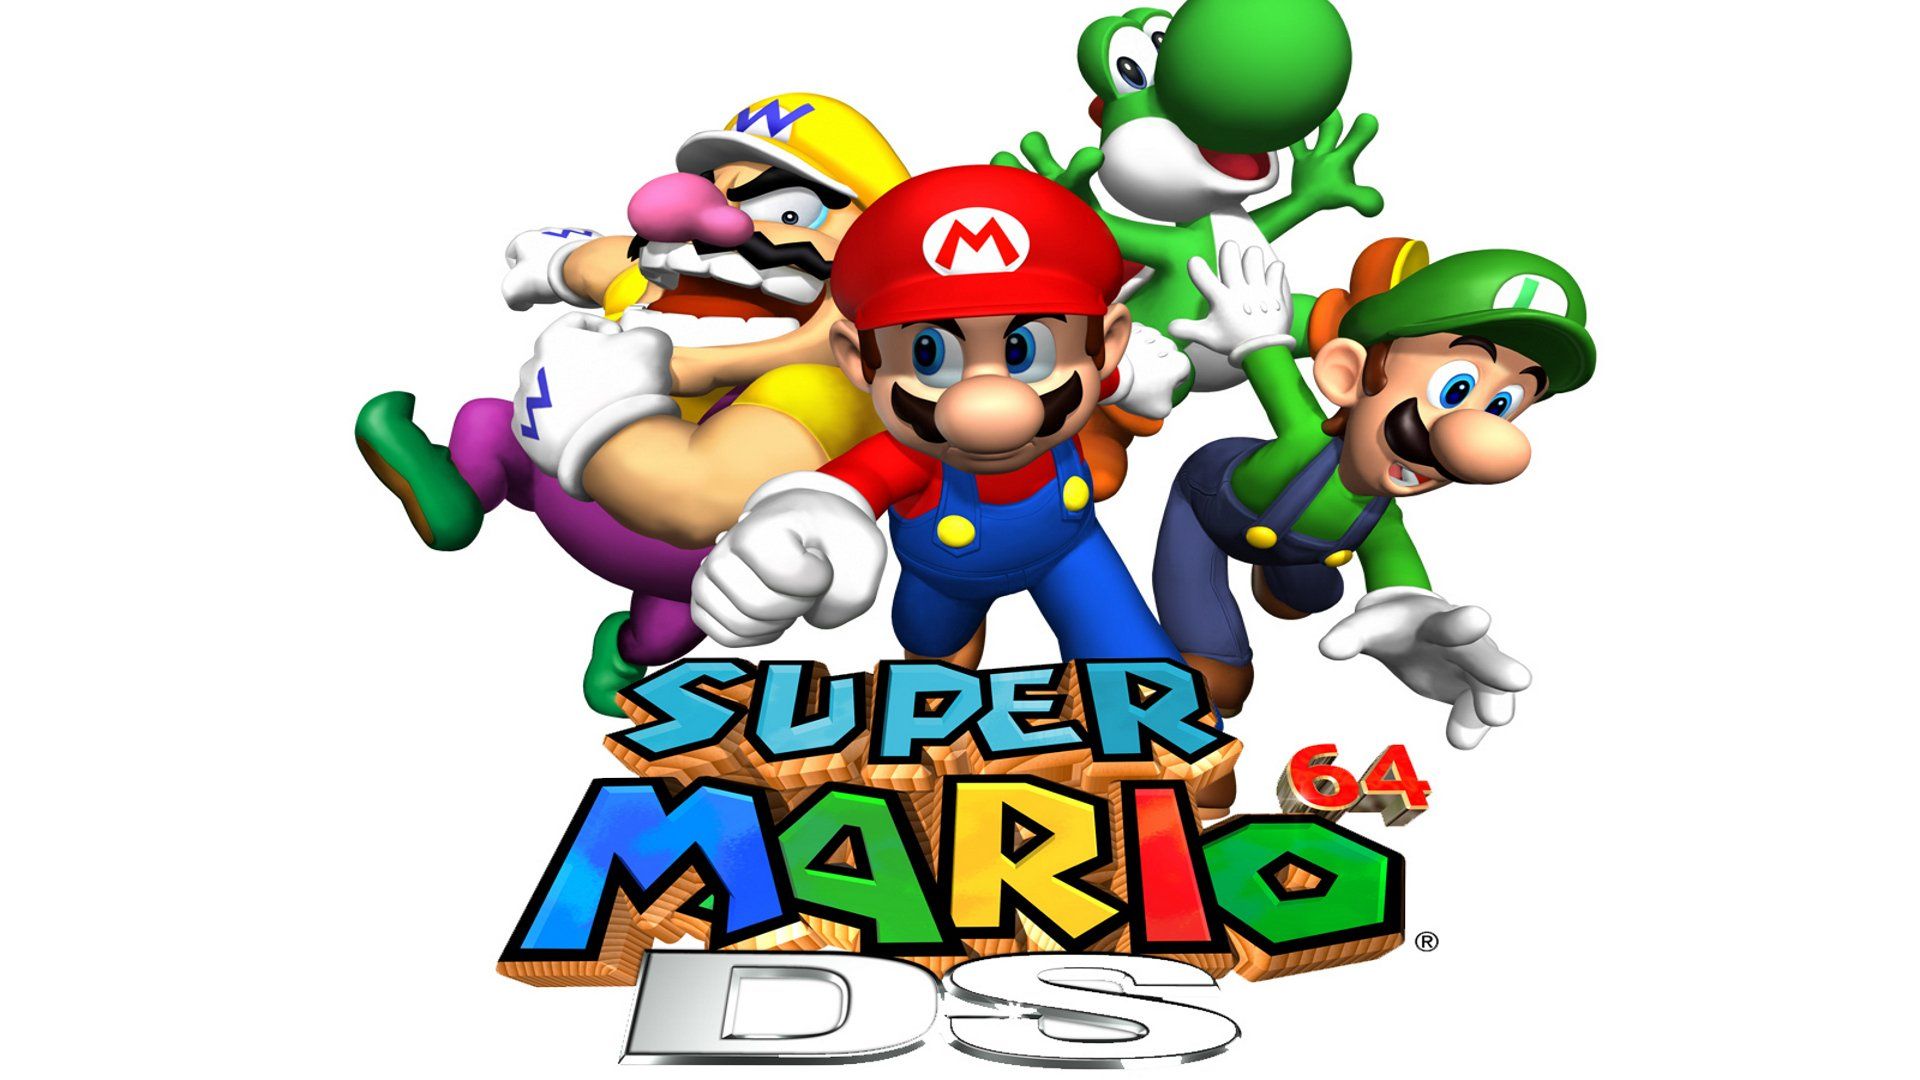 Super new песня. Супер Марио БРОС 64. Super Mario 64 обложка. Супер Марио 64 ДС. Super Mario 64 на ДС.